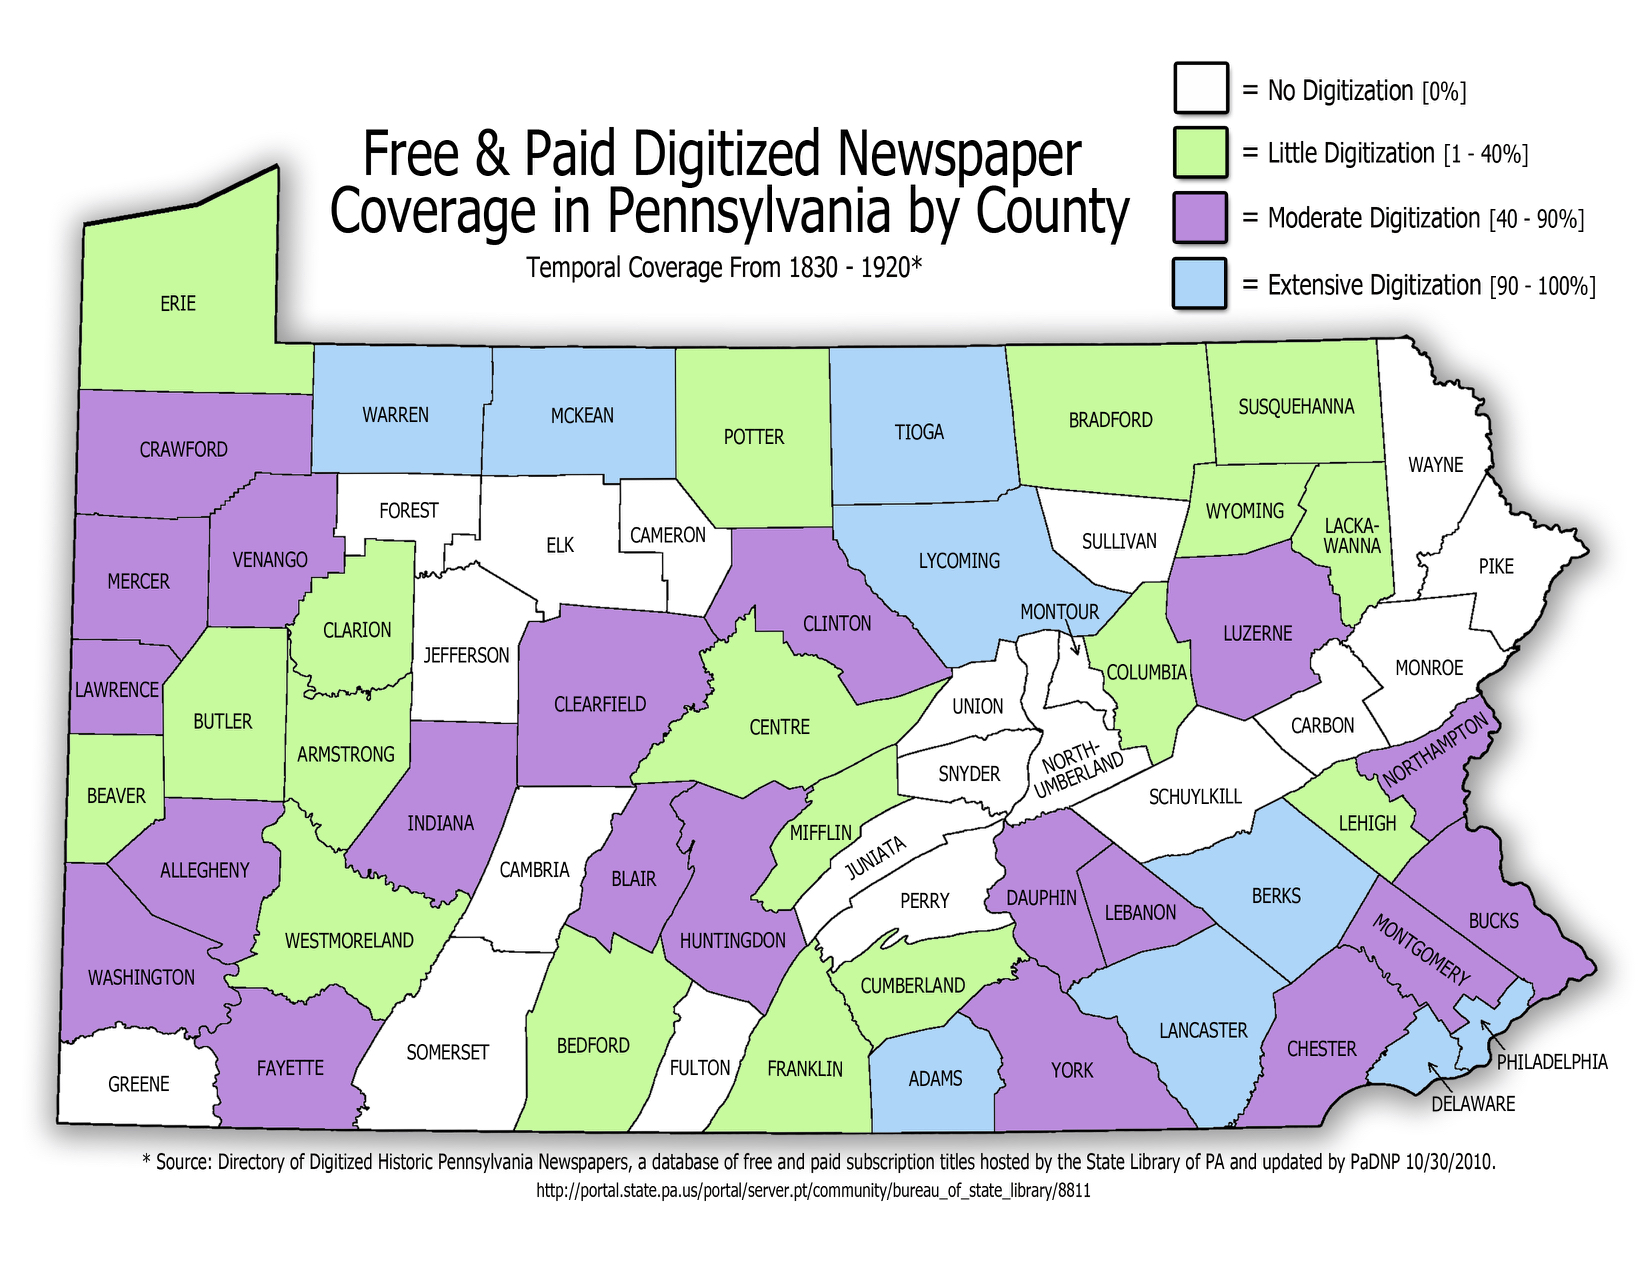 Map of historical newspaper digitization for Pennsylvania as of 2010, prepared for the Pennsylvania Digital Newspaper Program.